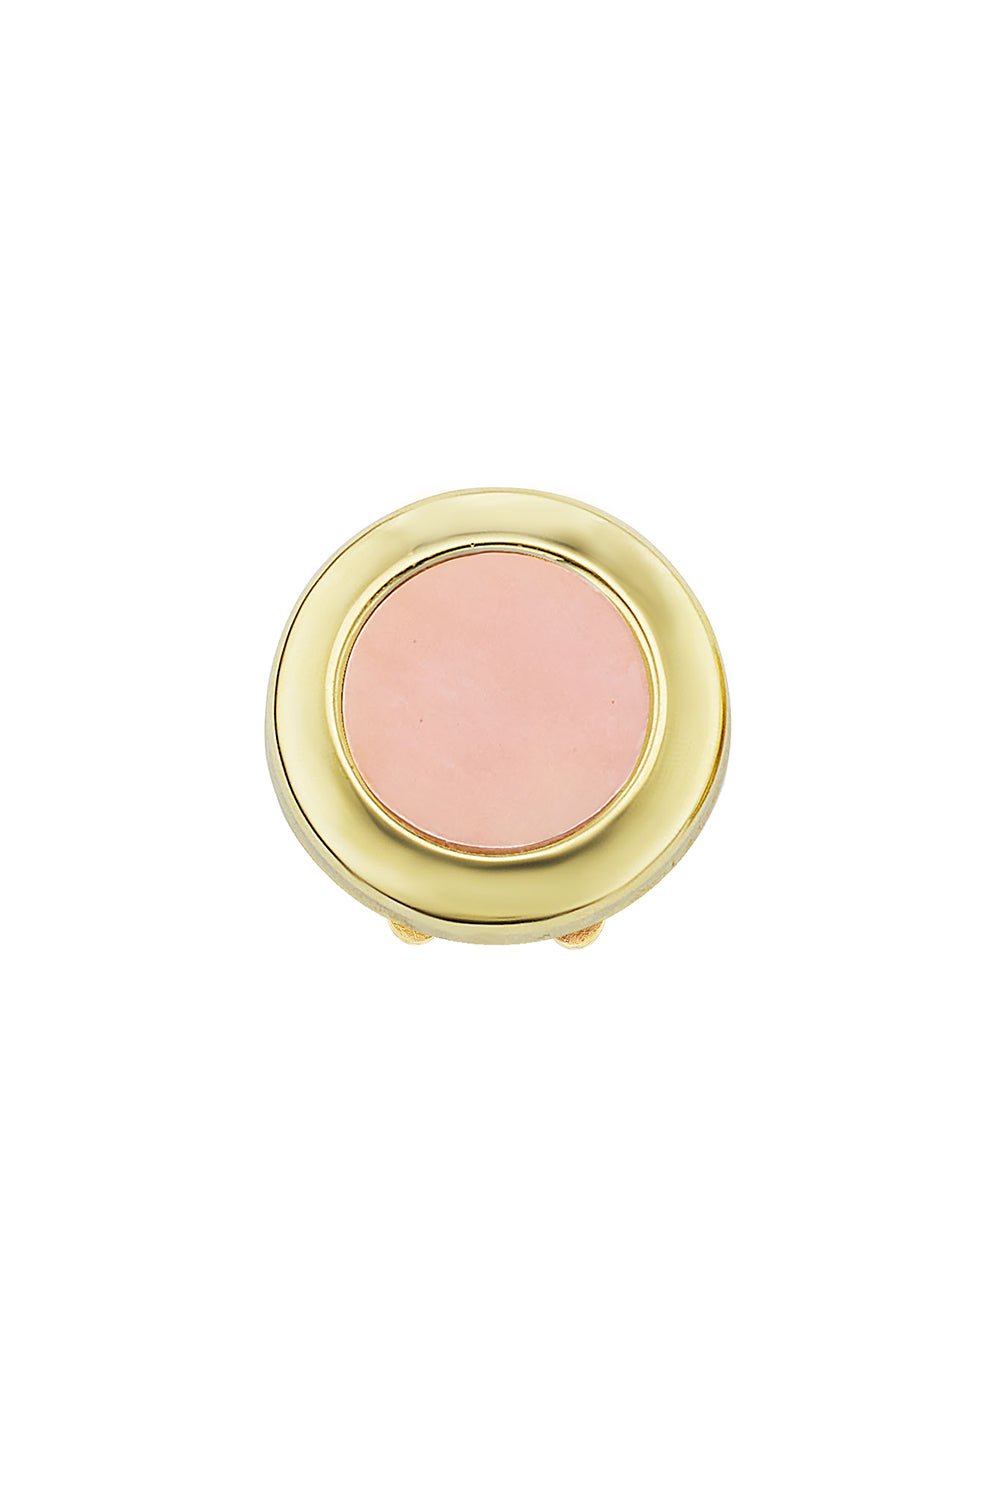 ANNA MACCIERI ROSSI-Pink Opal Button Cover-YELLOW GOLD